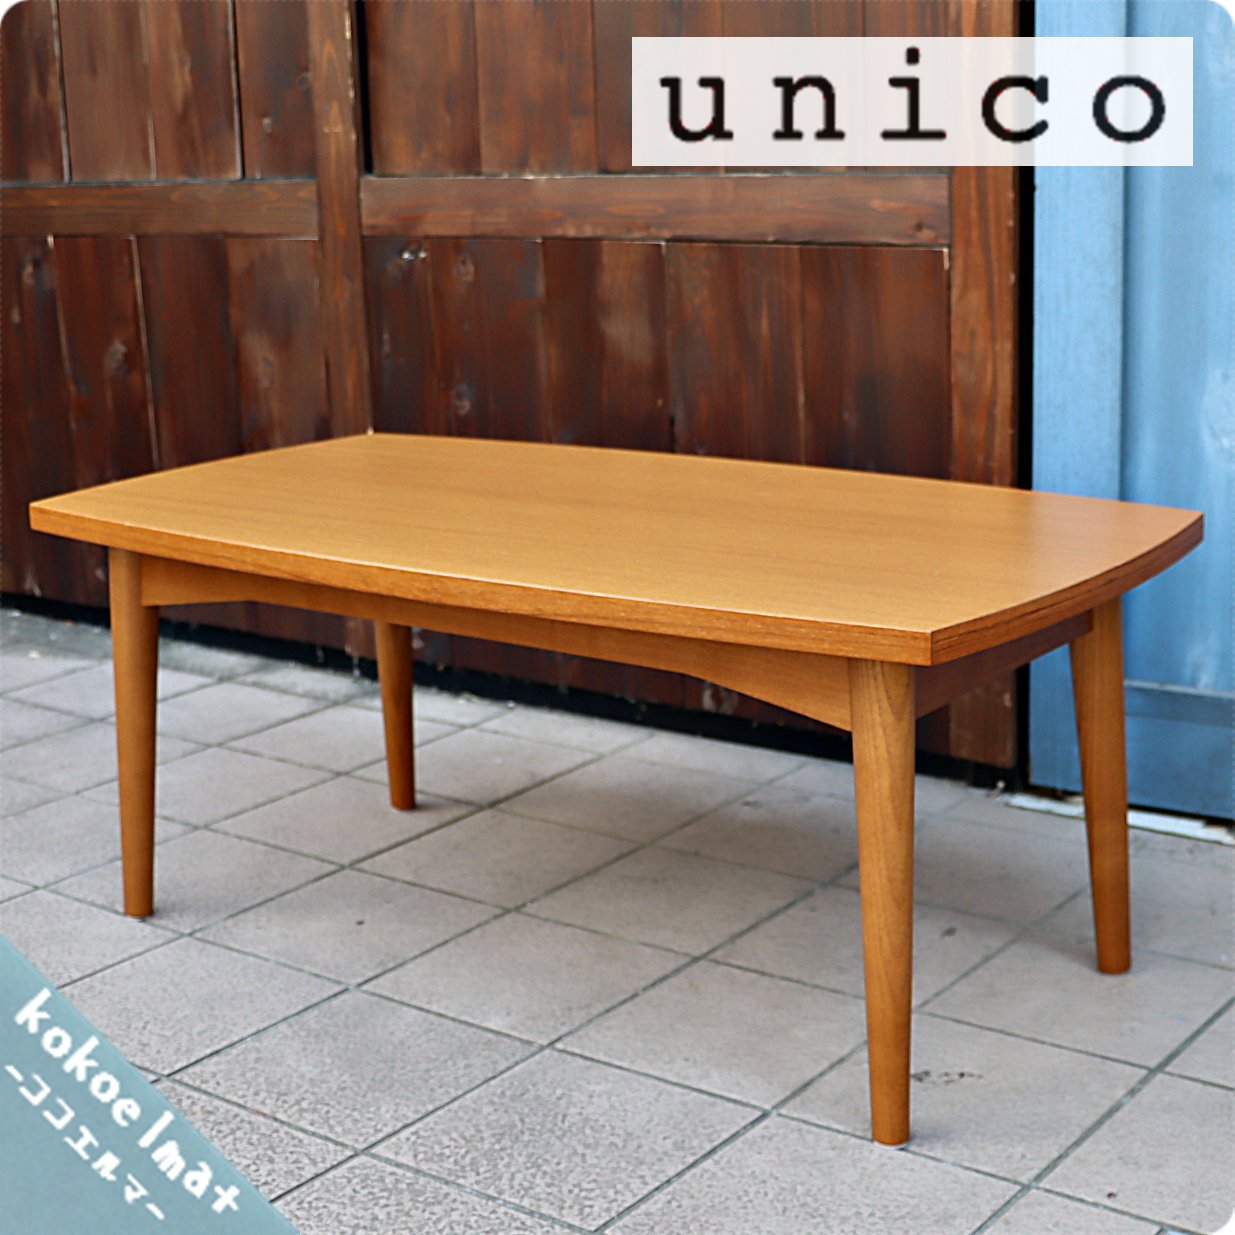 unico(ウニコ)のHOLM(ホルム)シリーズ ローテーブルです！ナチュラルな 